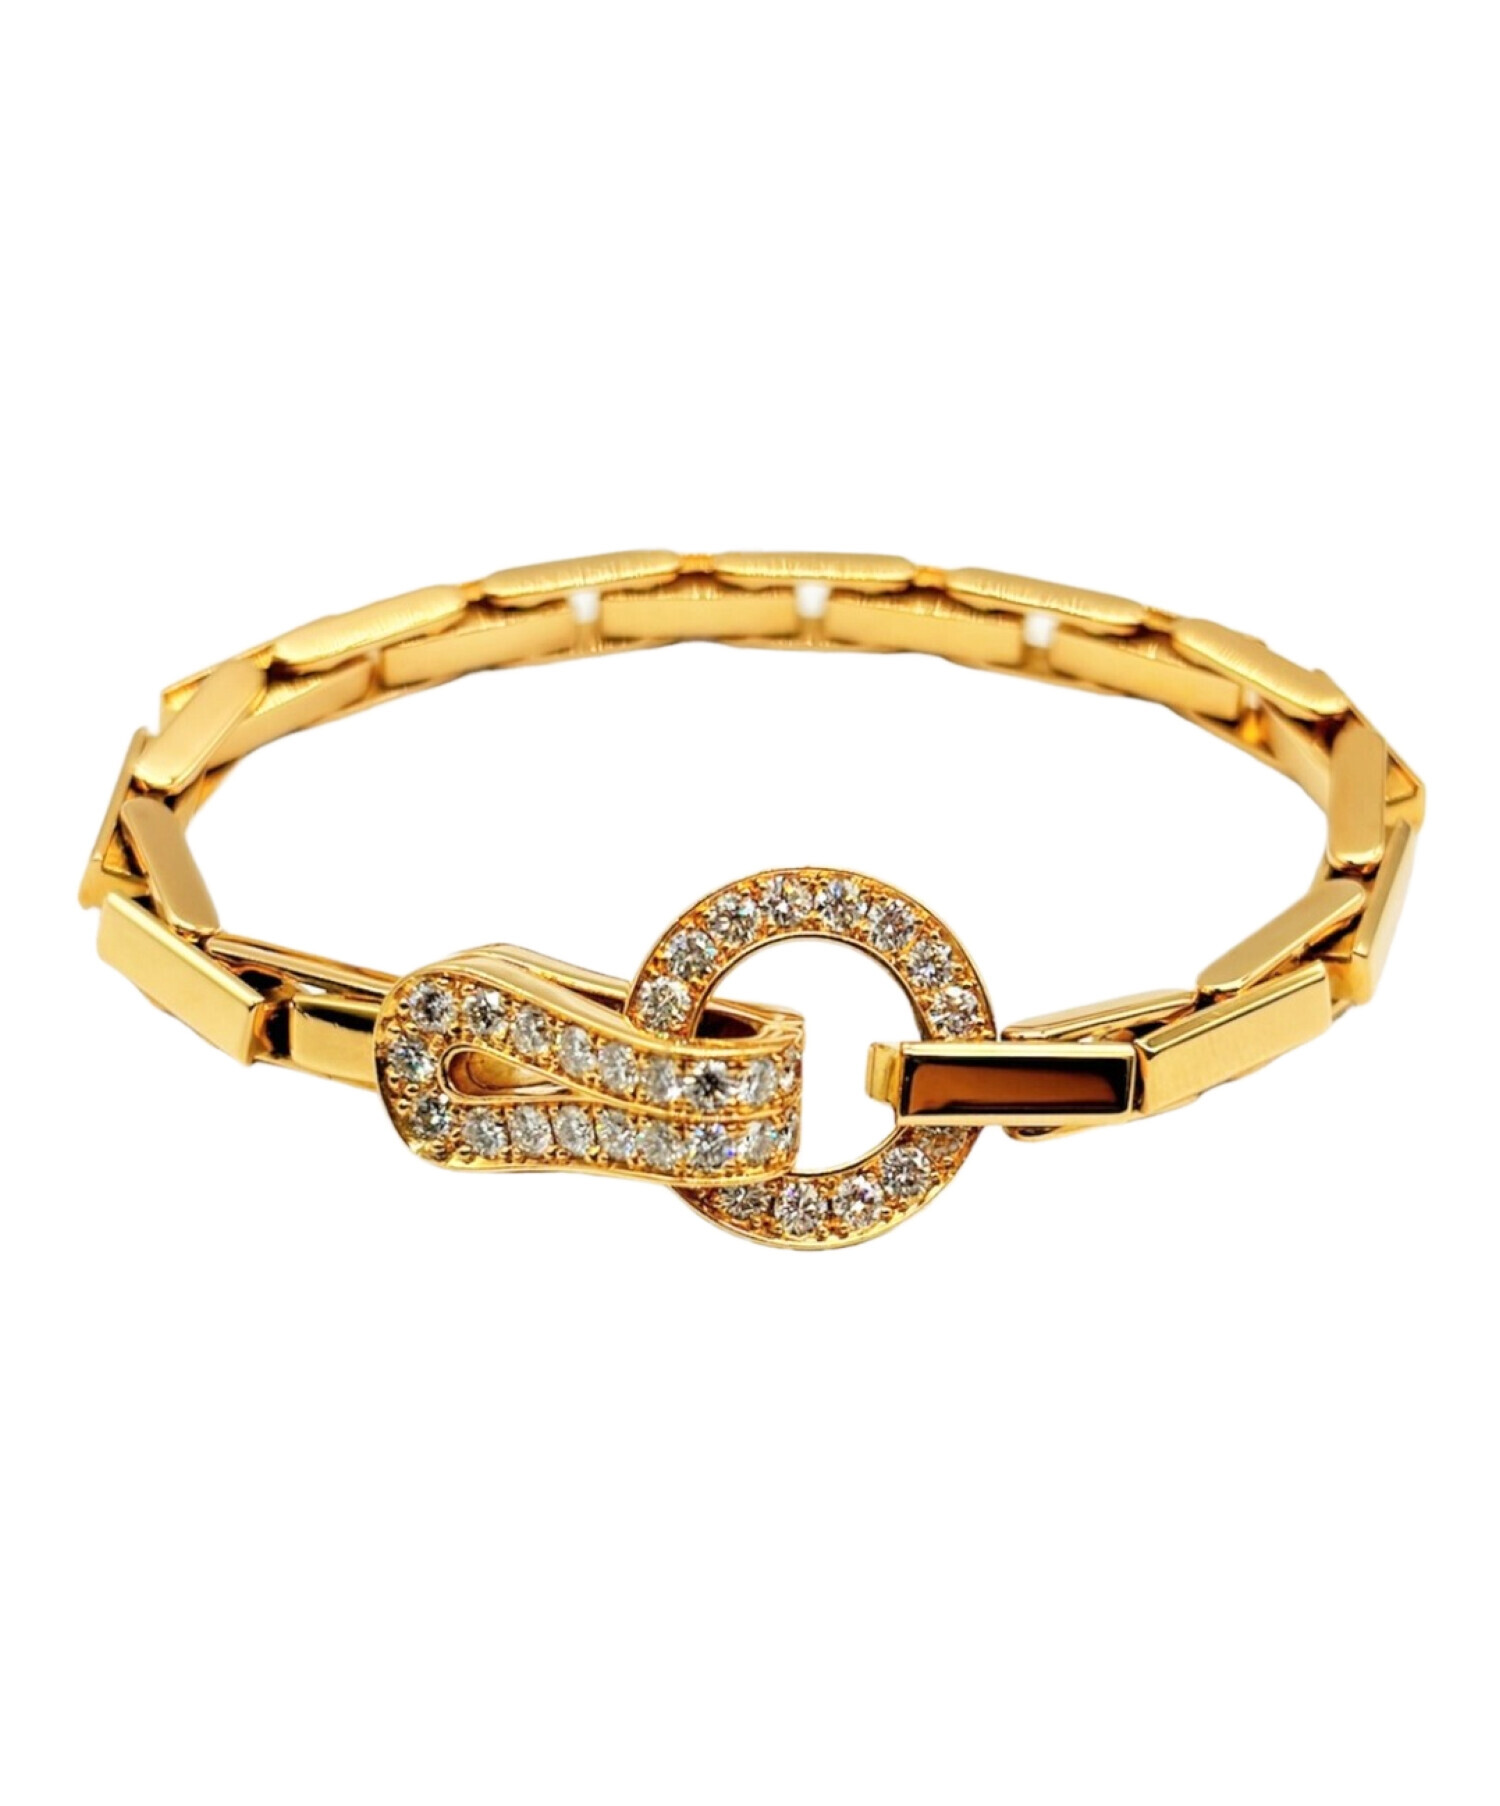 Cartier (カルティエ) Agrafe Diamond Bracelet サイズ:-